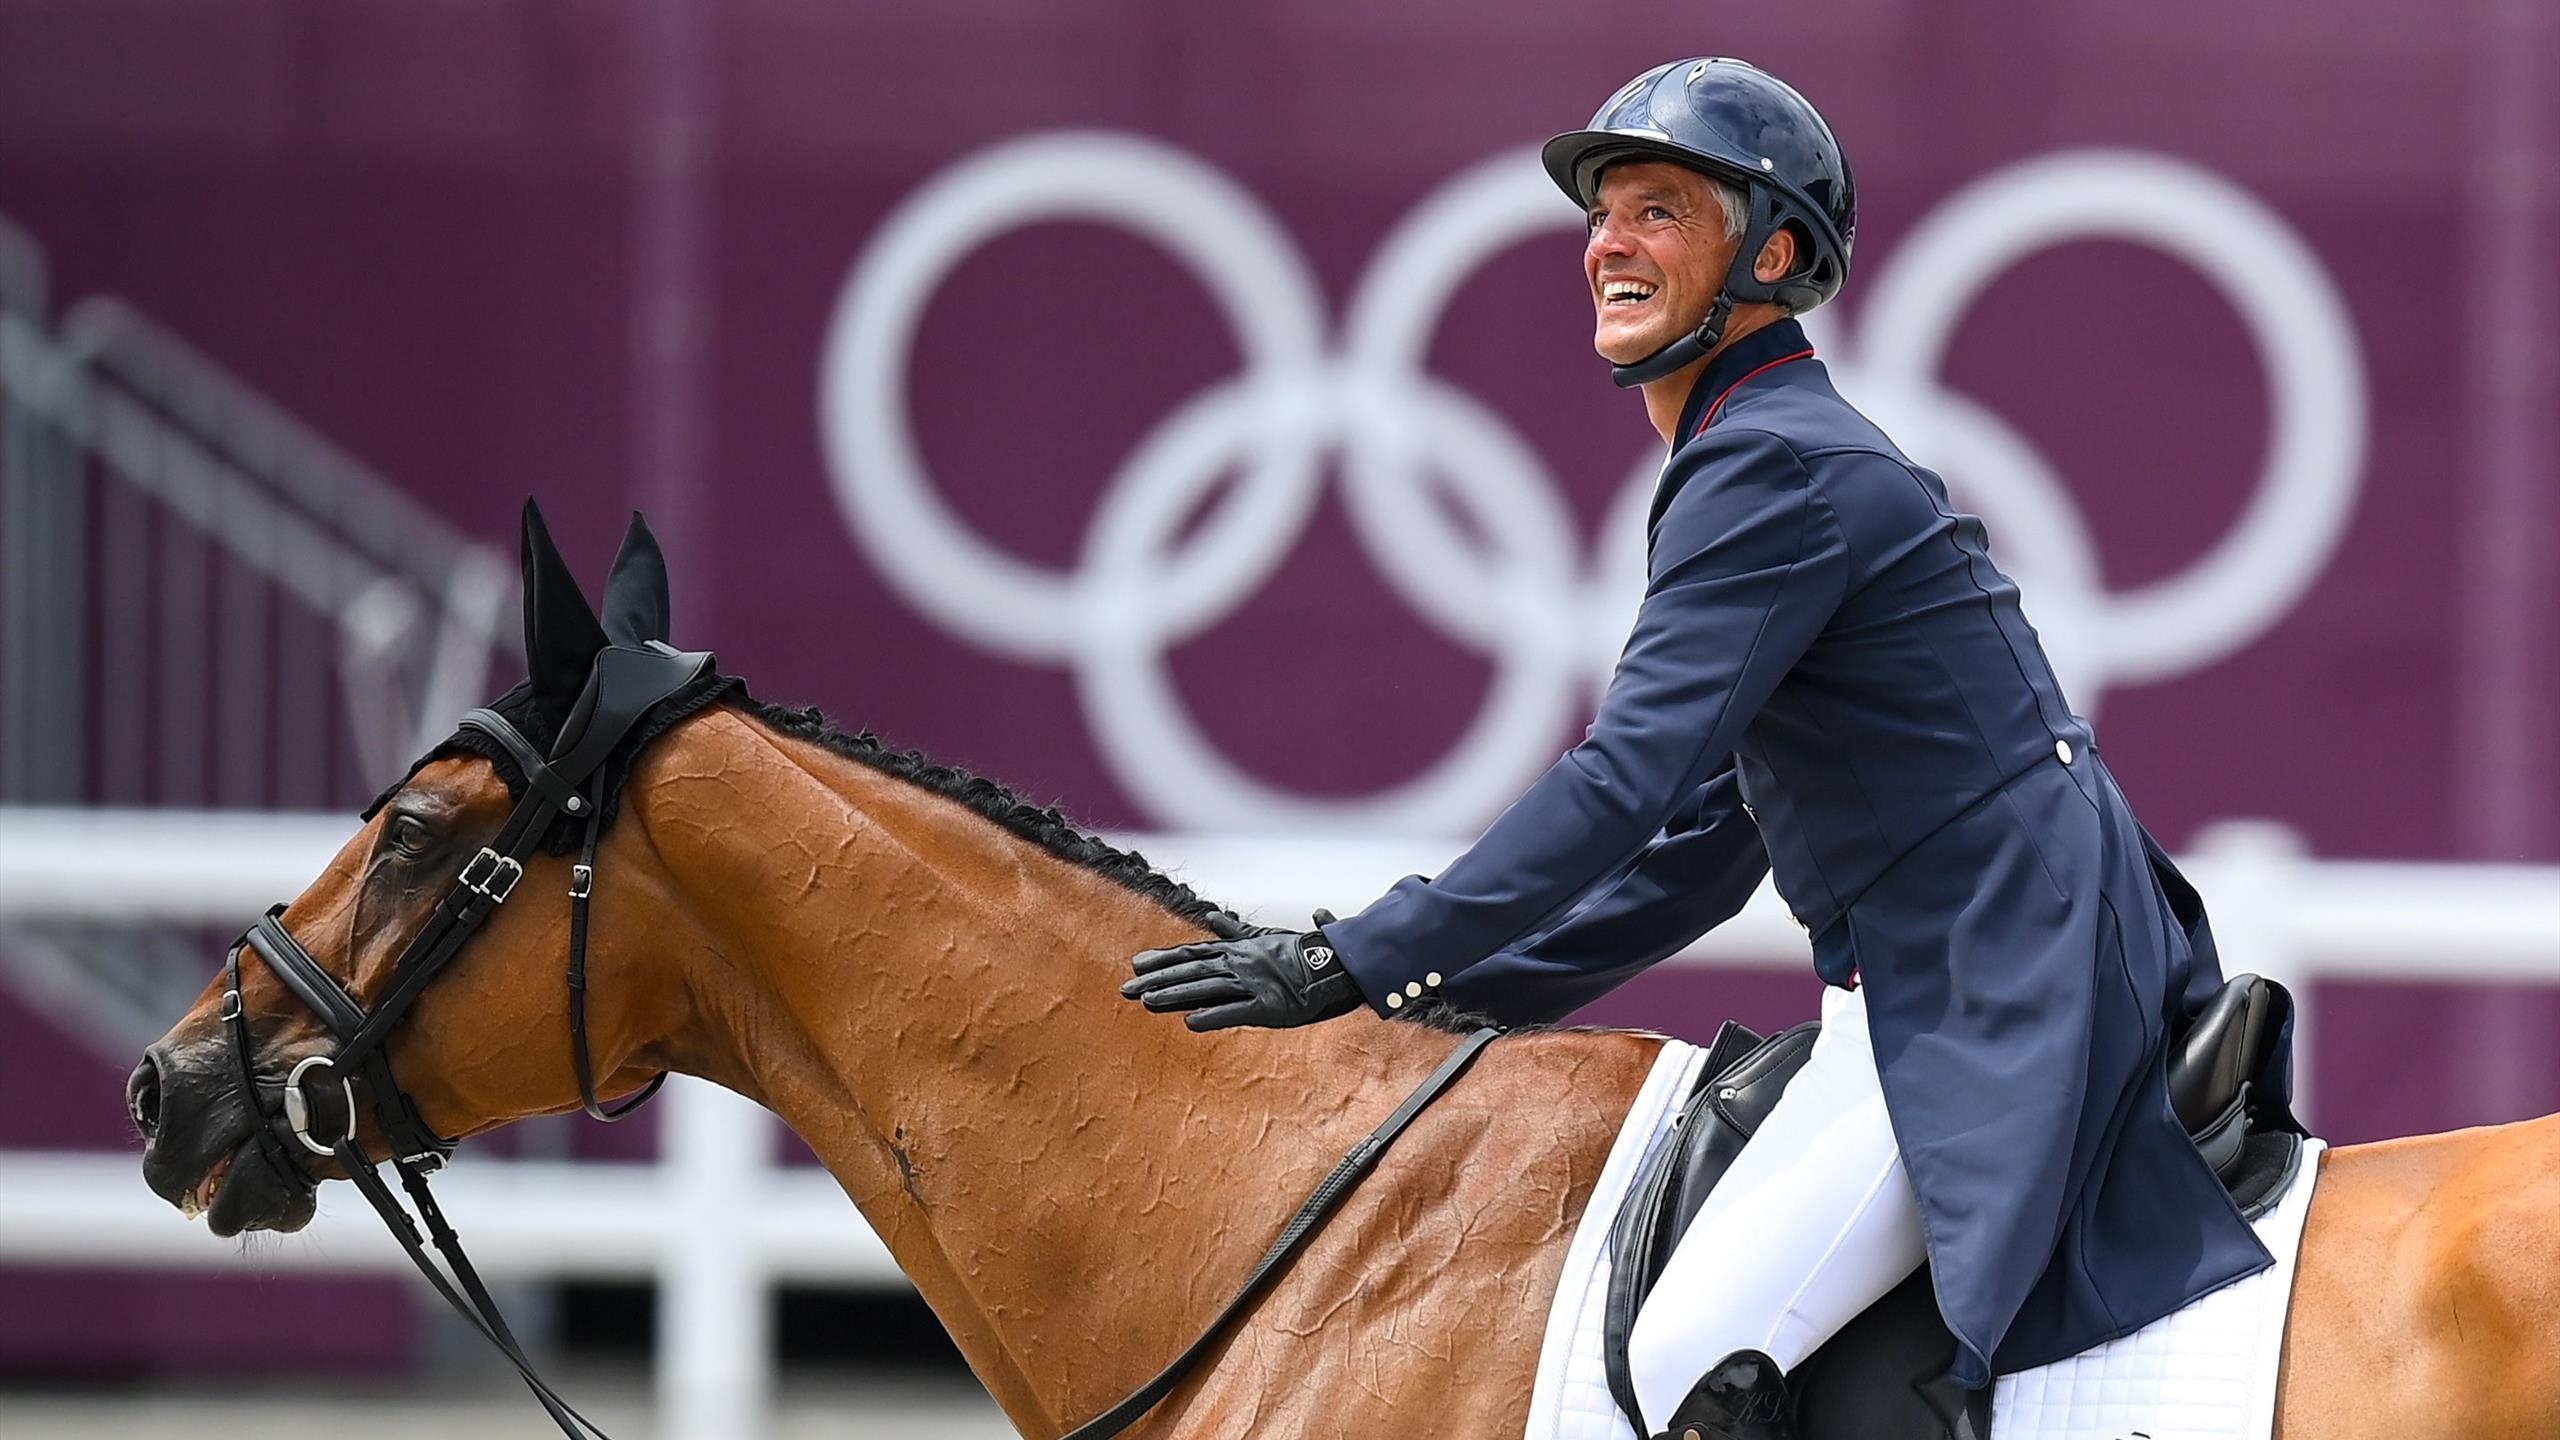 Equitation: Karim Laghouag at The 2020 Tokyo Summer Olympics, Competitive sport. 2560x1440 HD Wallpaper.